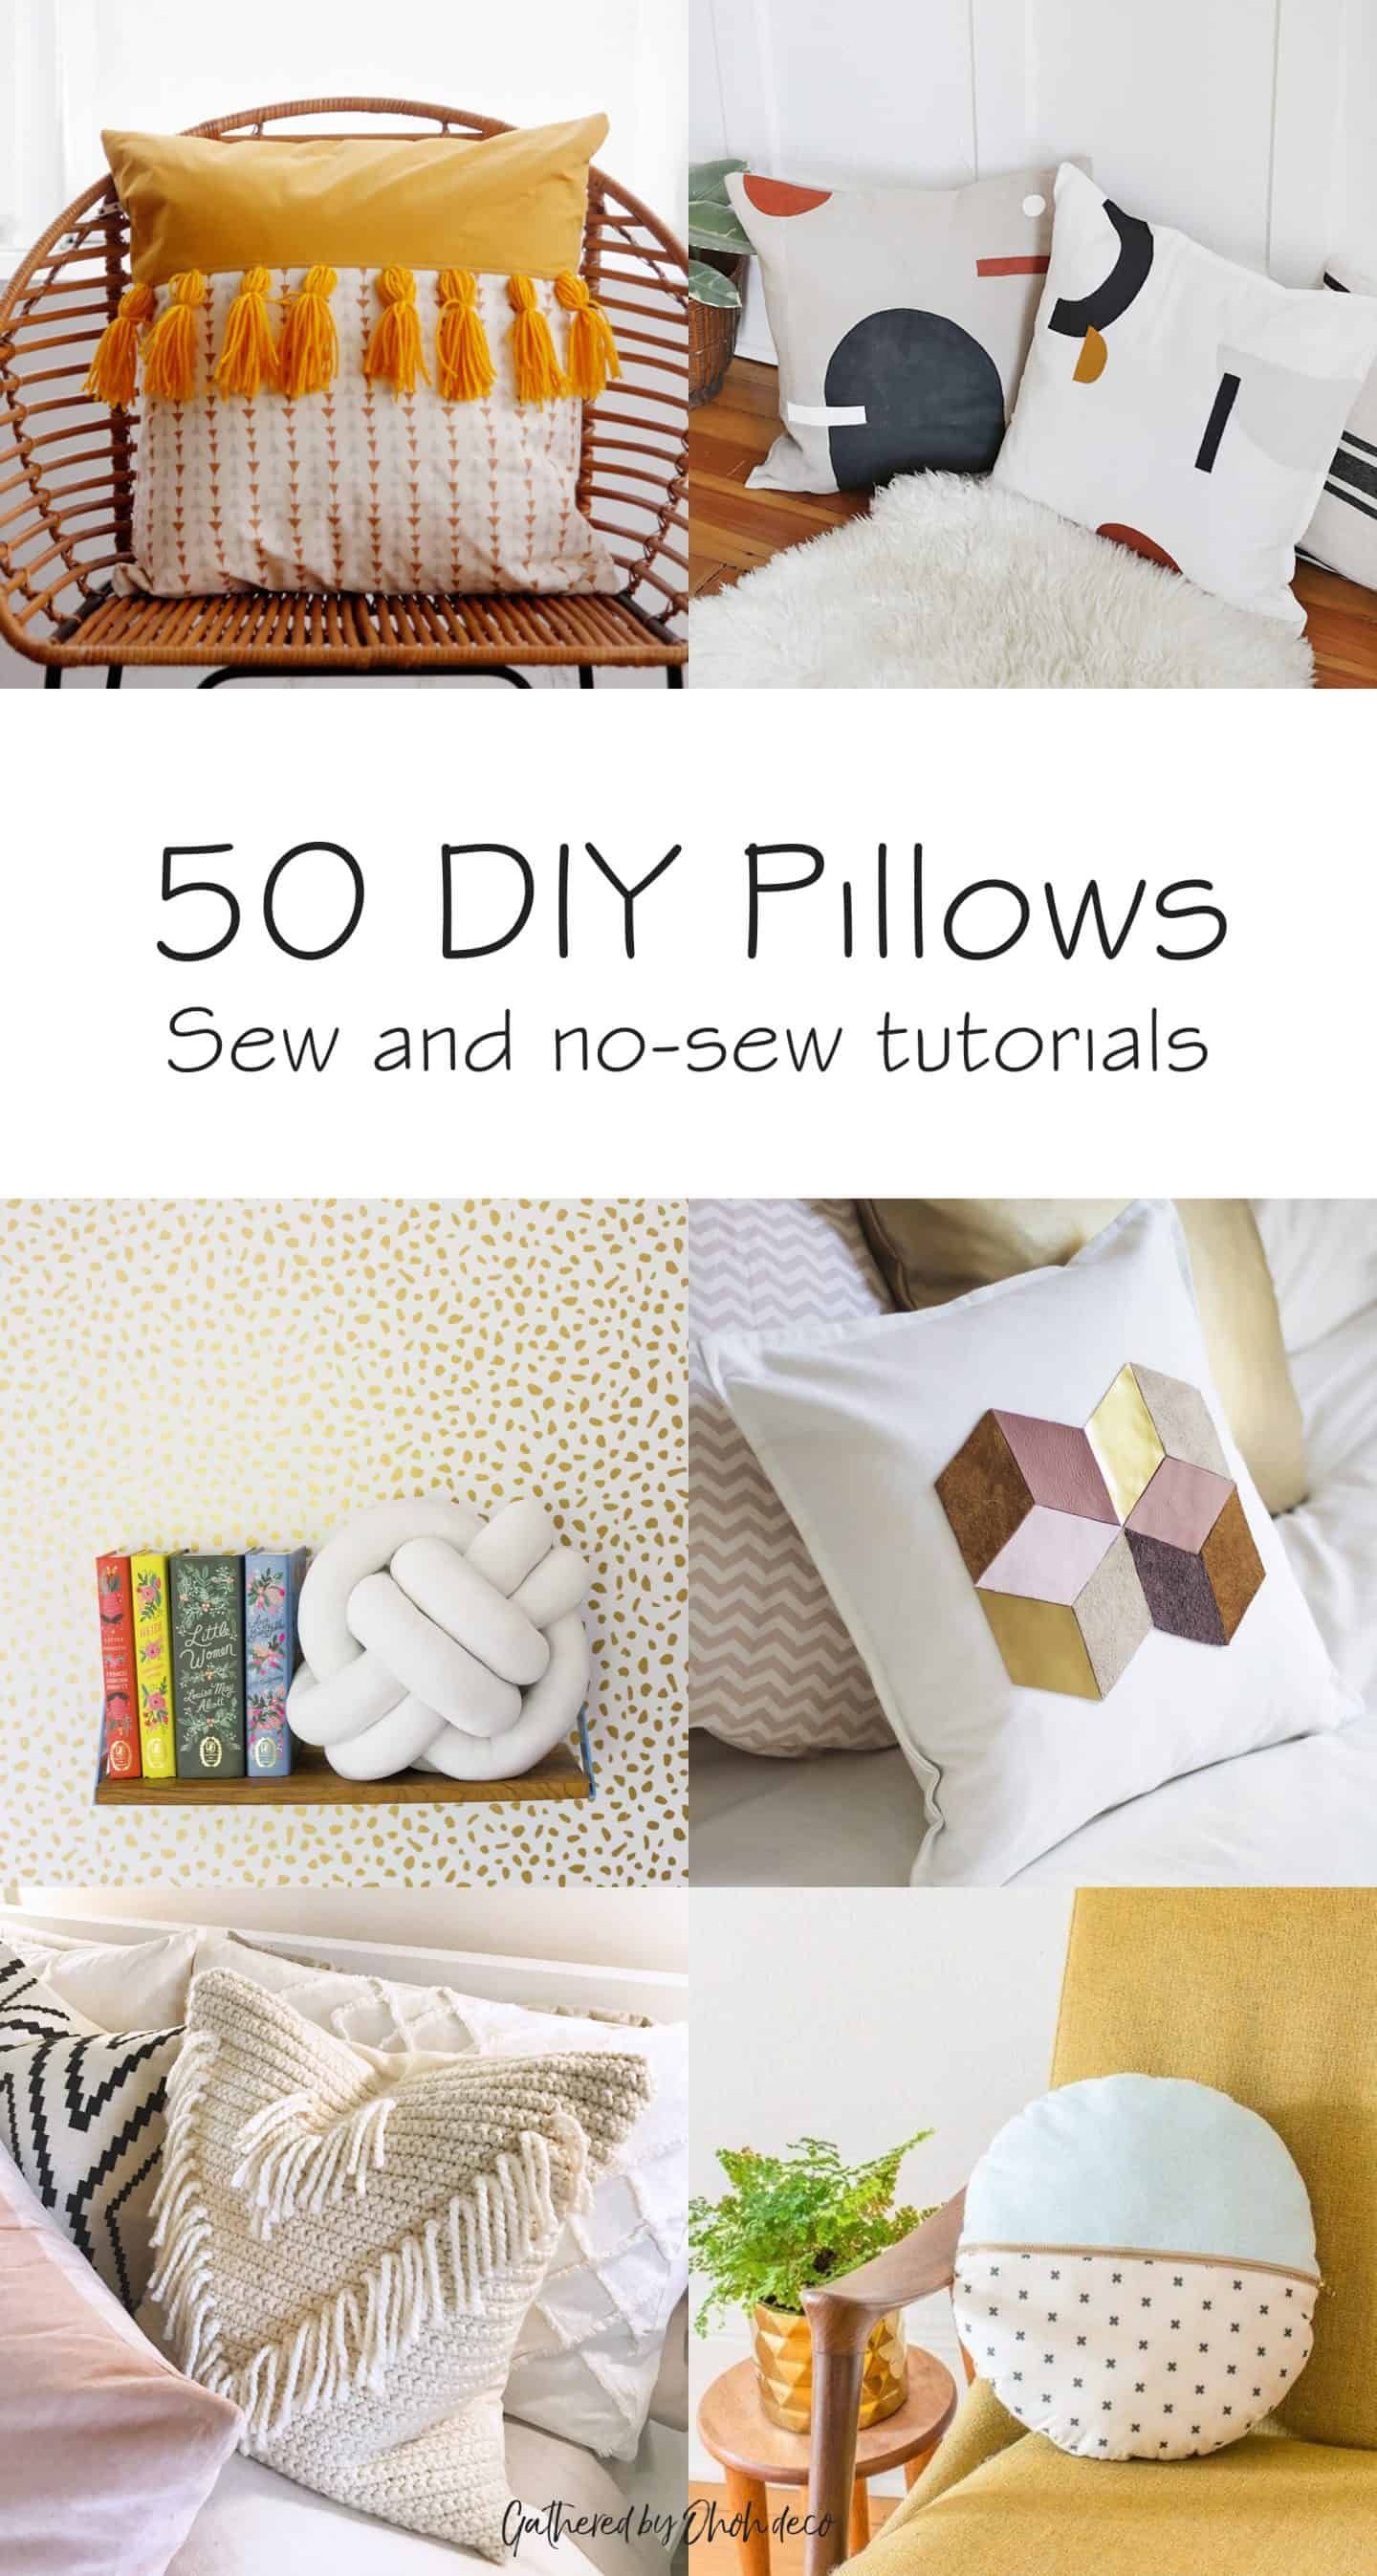 50 DIY pillows to jazz up your decor - Ohoh deco - 50 DIY pillows to jazz up your decor - Ohoh deco -   18 diy Pillows decorative ideas